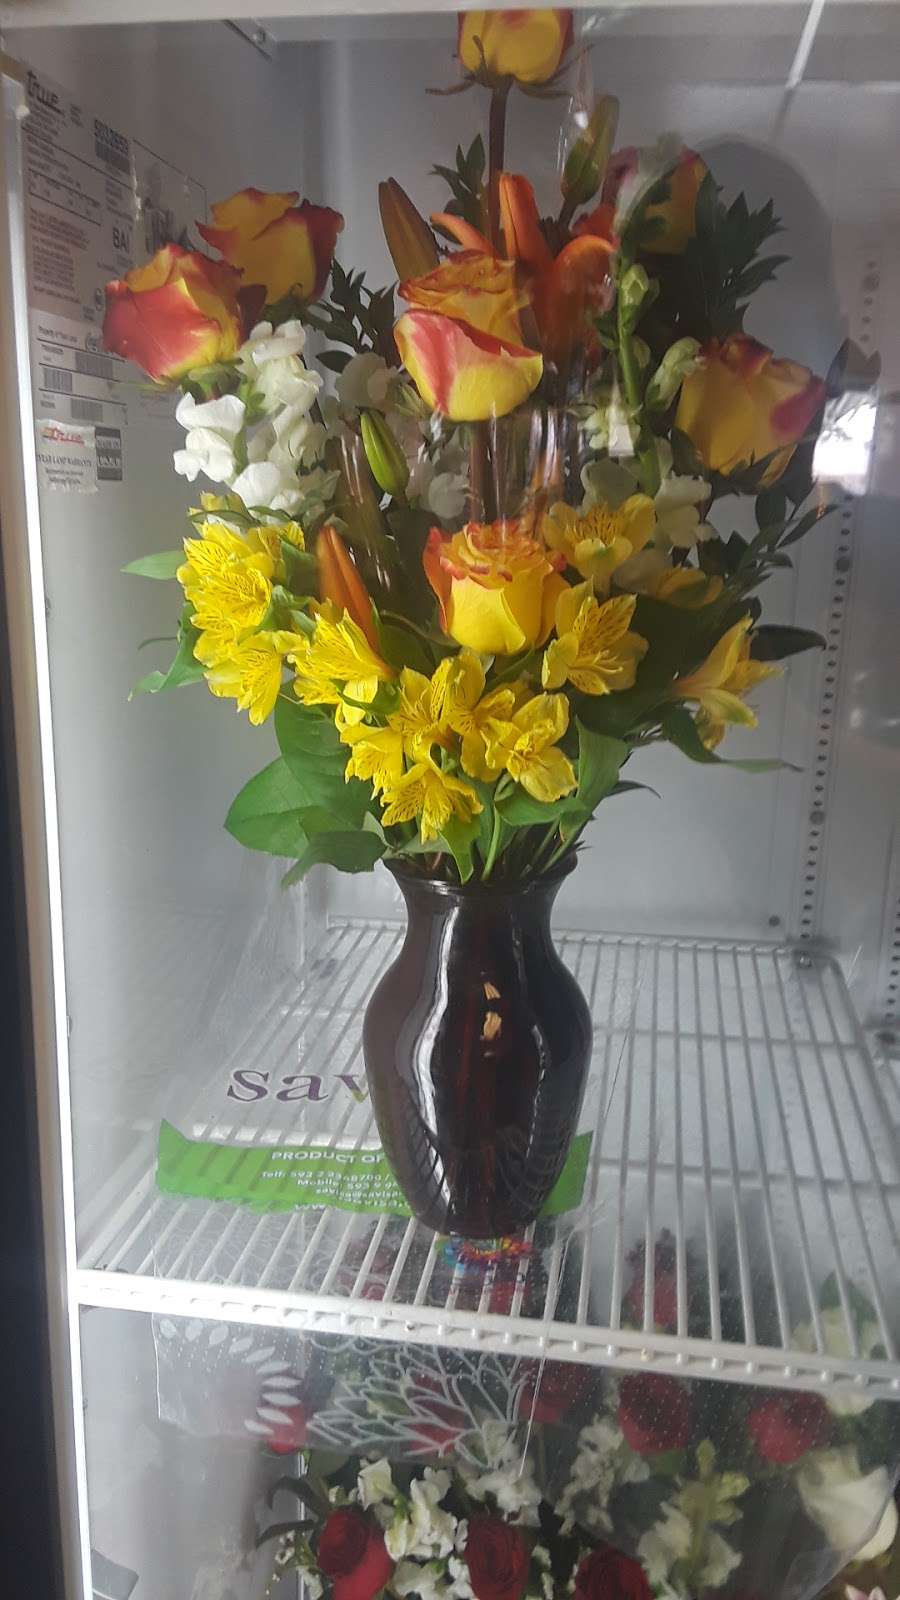 St.Raphael Flower Mini Store $99 Up | 9905 San Pedro St, Los Angeles, CA 90003